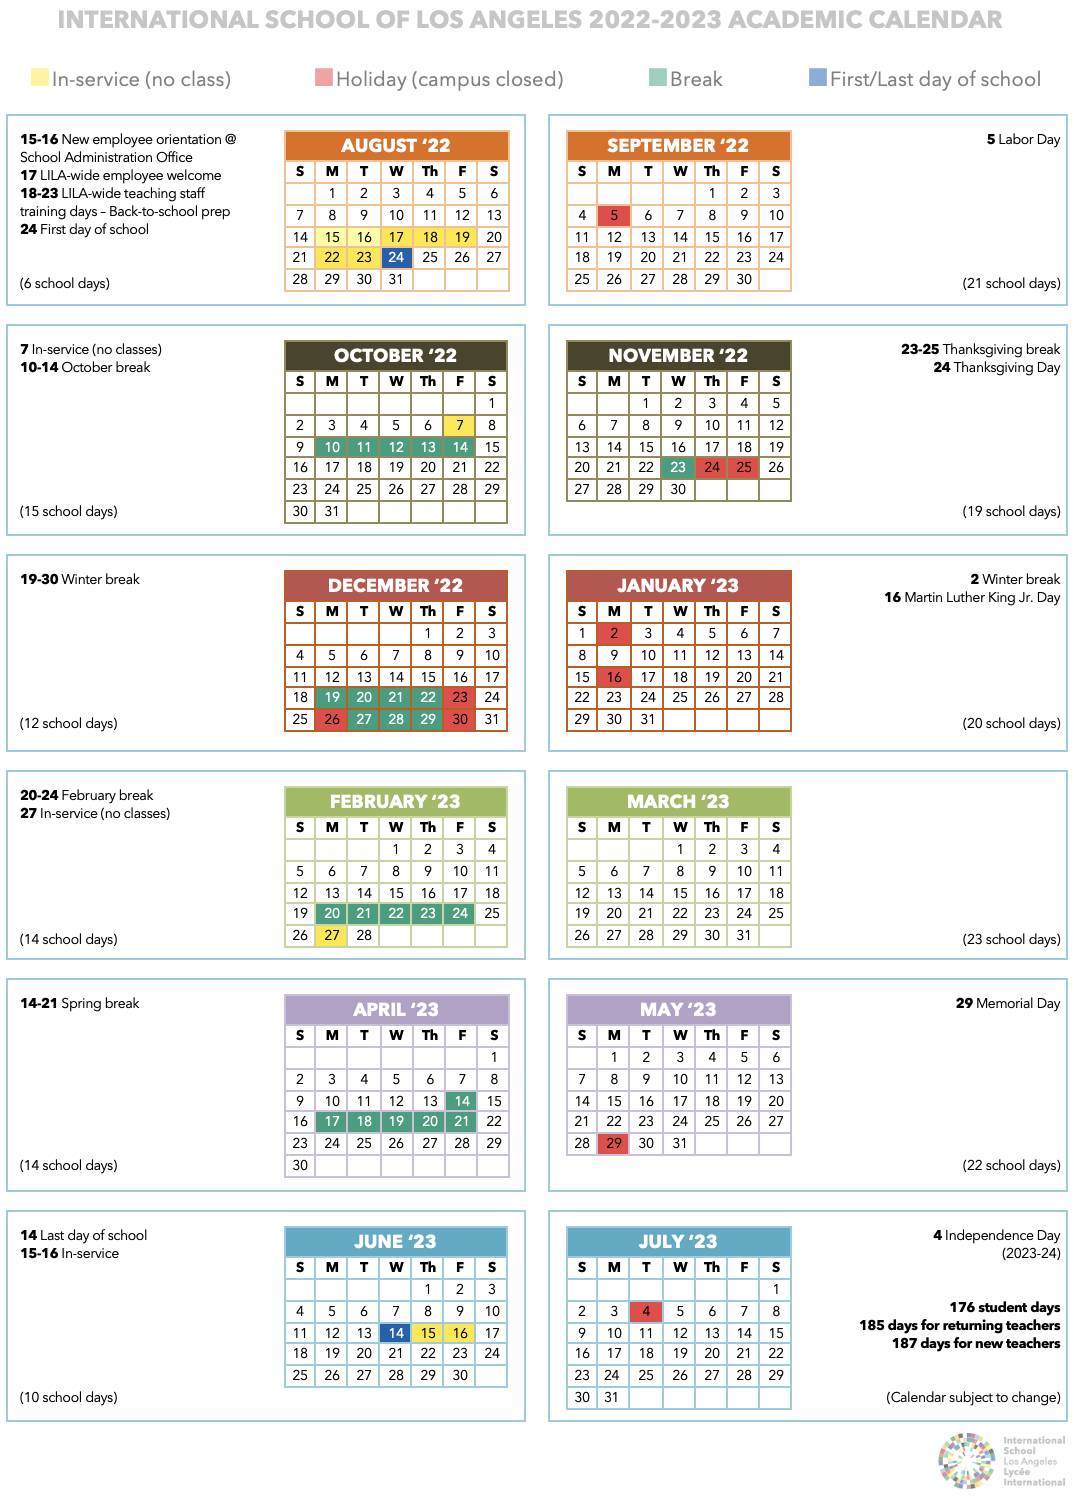 Csun Academic Calendar 2022 Calendar | International School Of Los Angeles